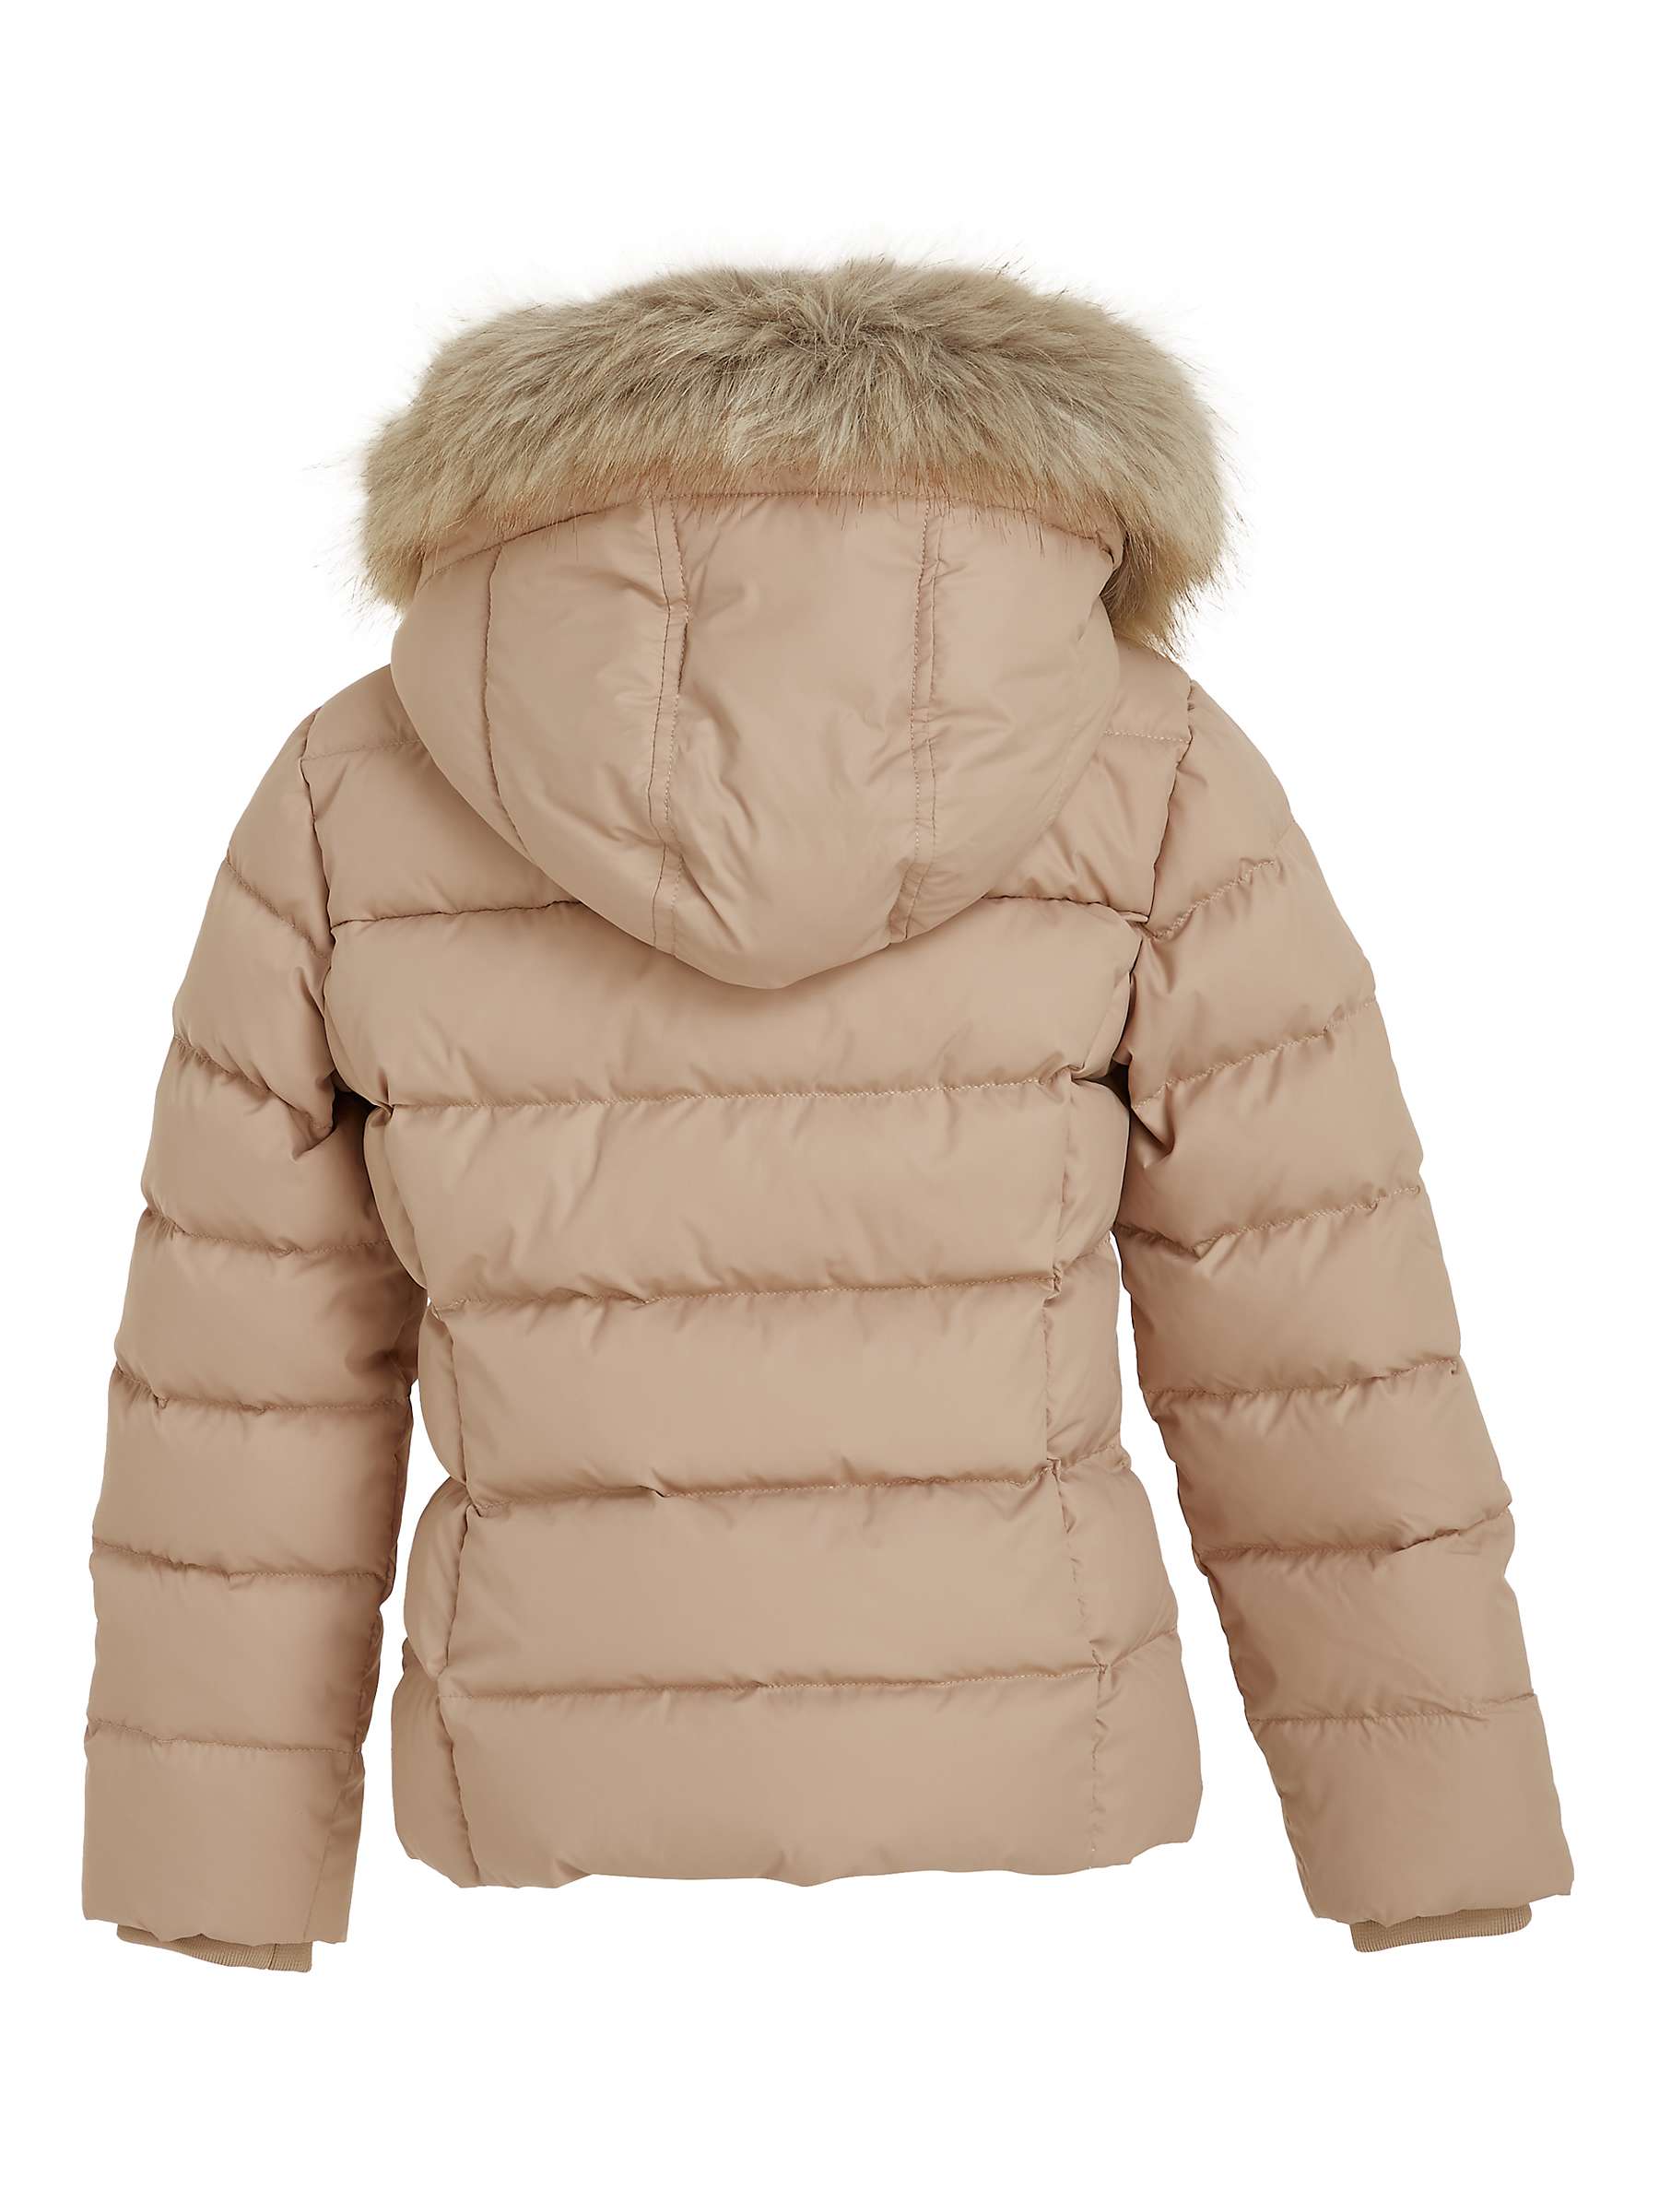 Buy Tommy Hilfiger Kids' Padded Fur Hood Jacket, Merino Online at johnlewis.com